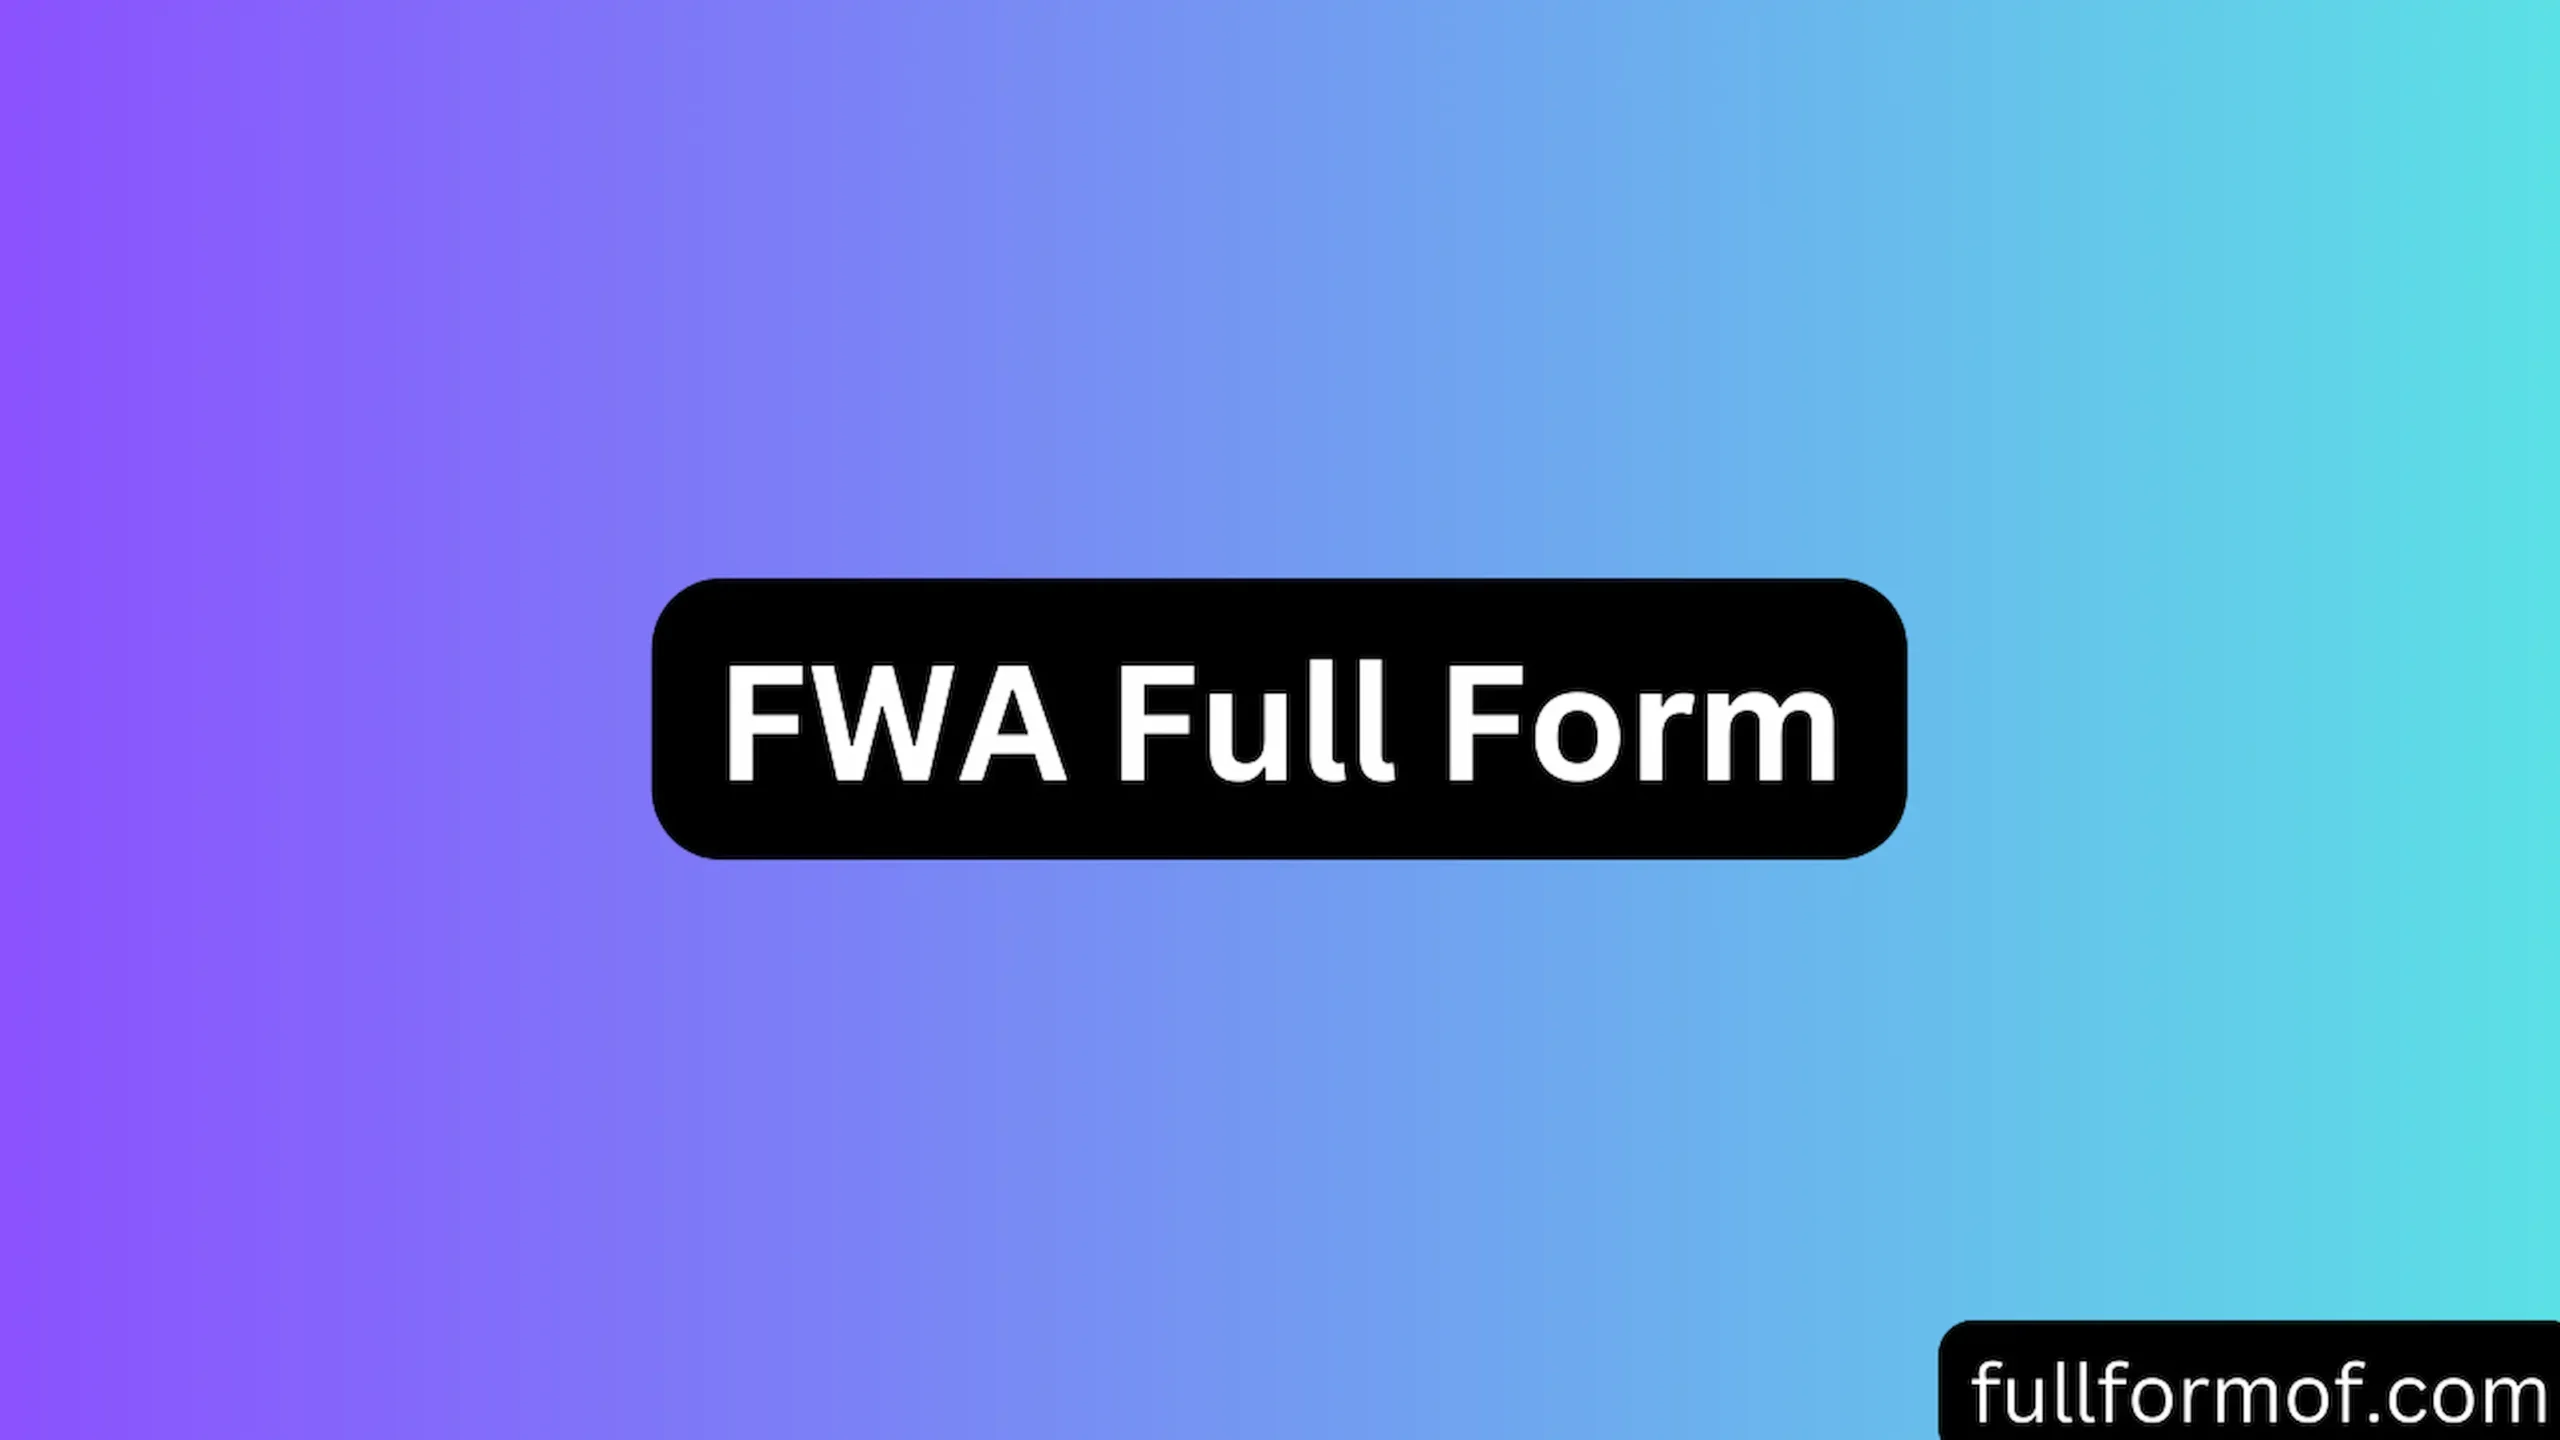 FWA Full Form